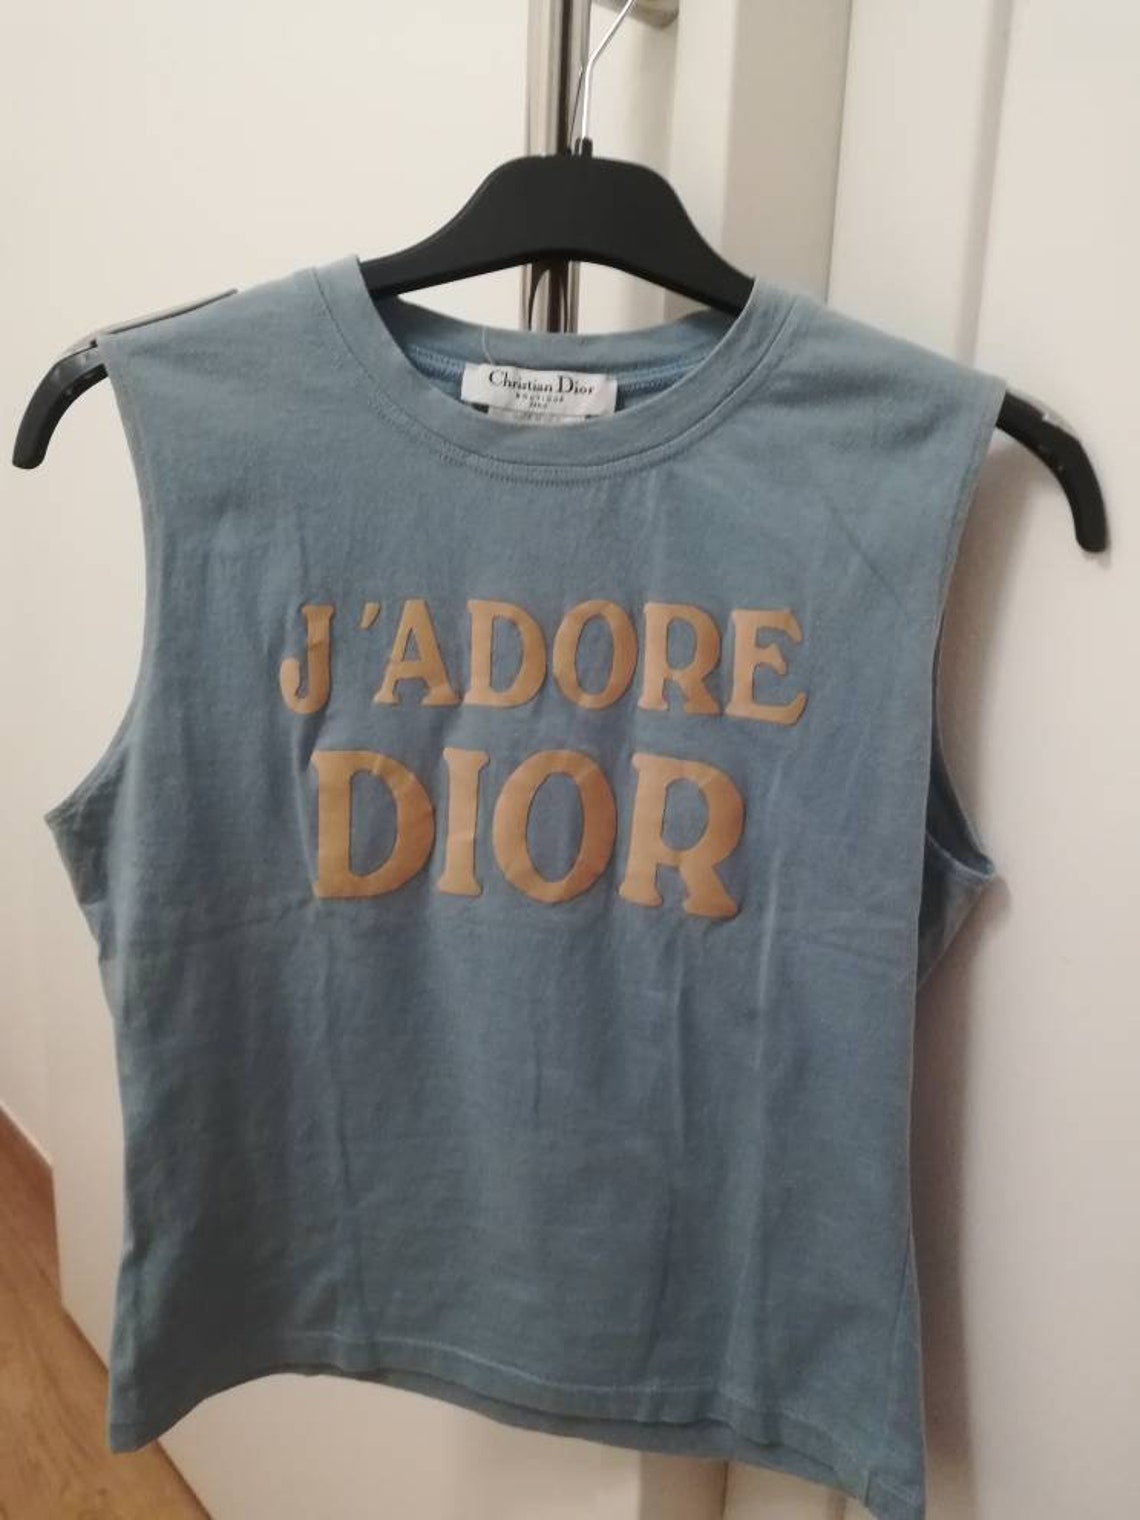 T-shirt J'adore Dior 1947 Vintage Top selten | Etsy